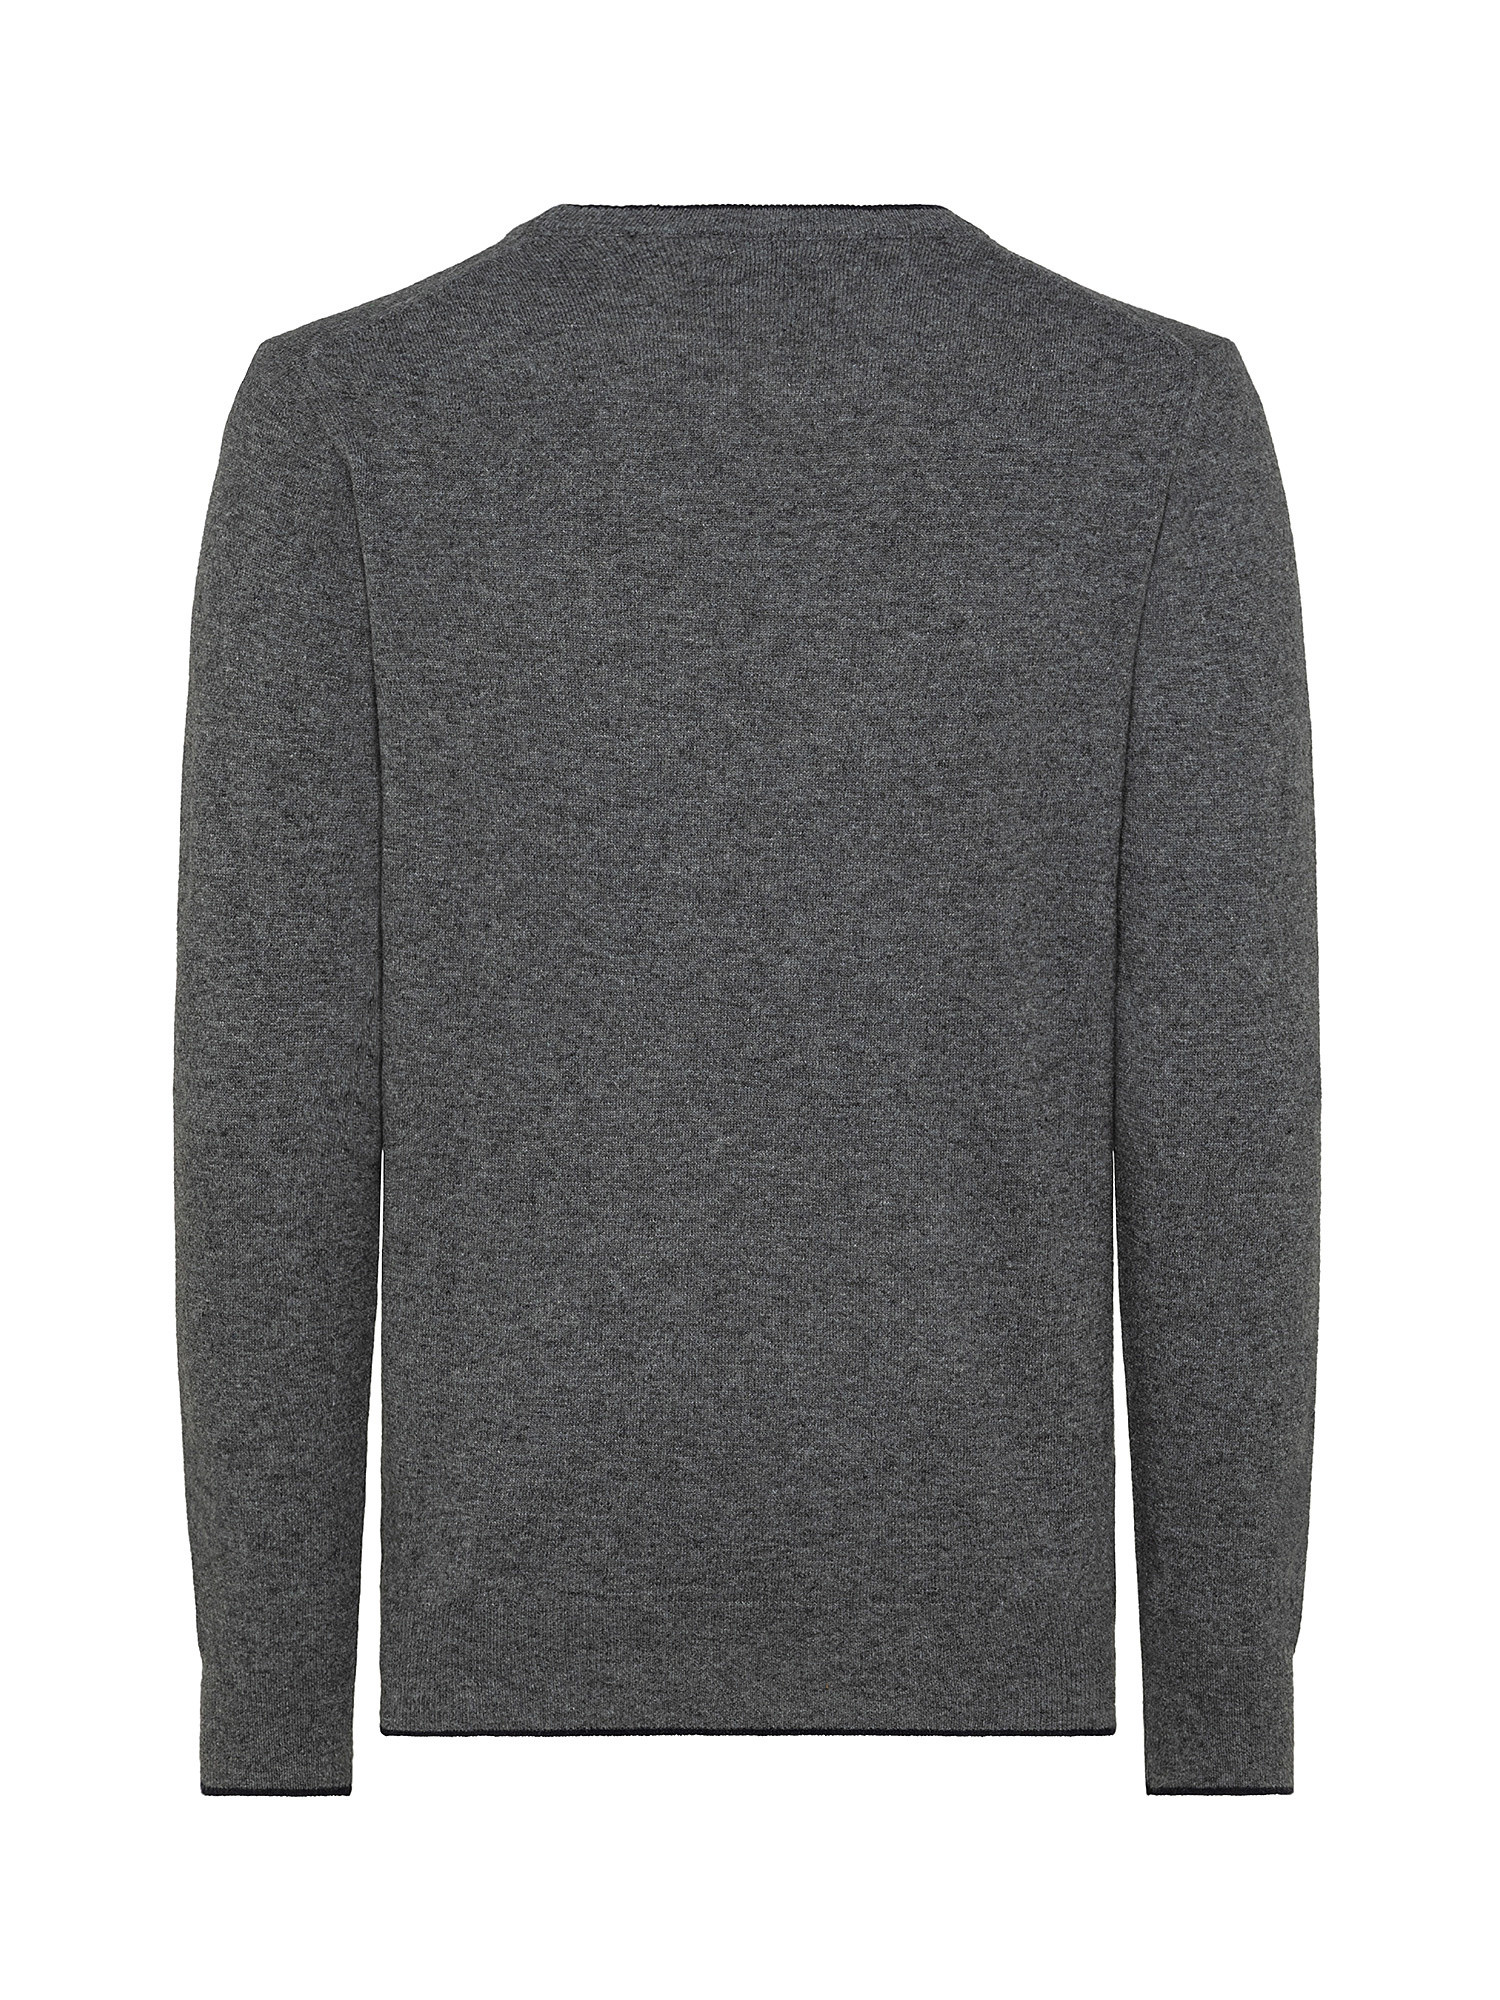 Crewneck sweater, Grey, large image number 1